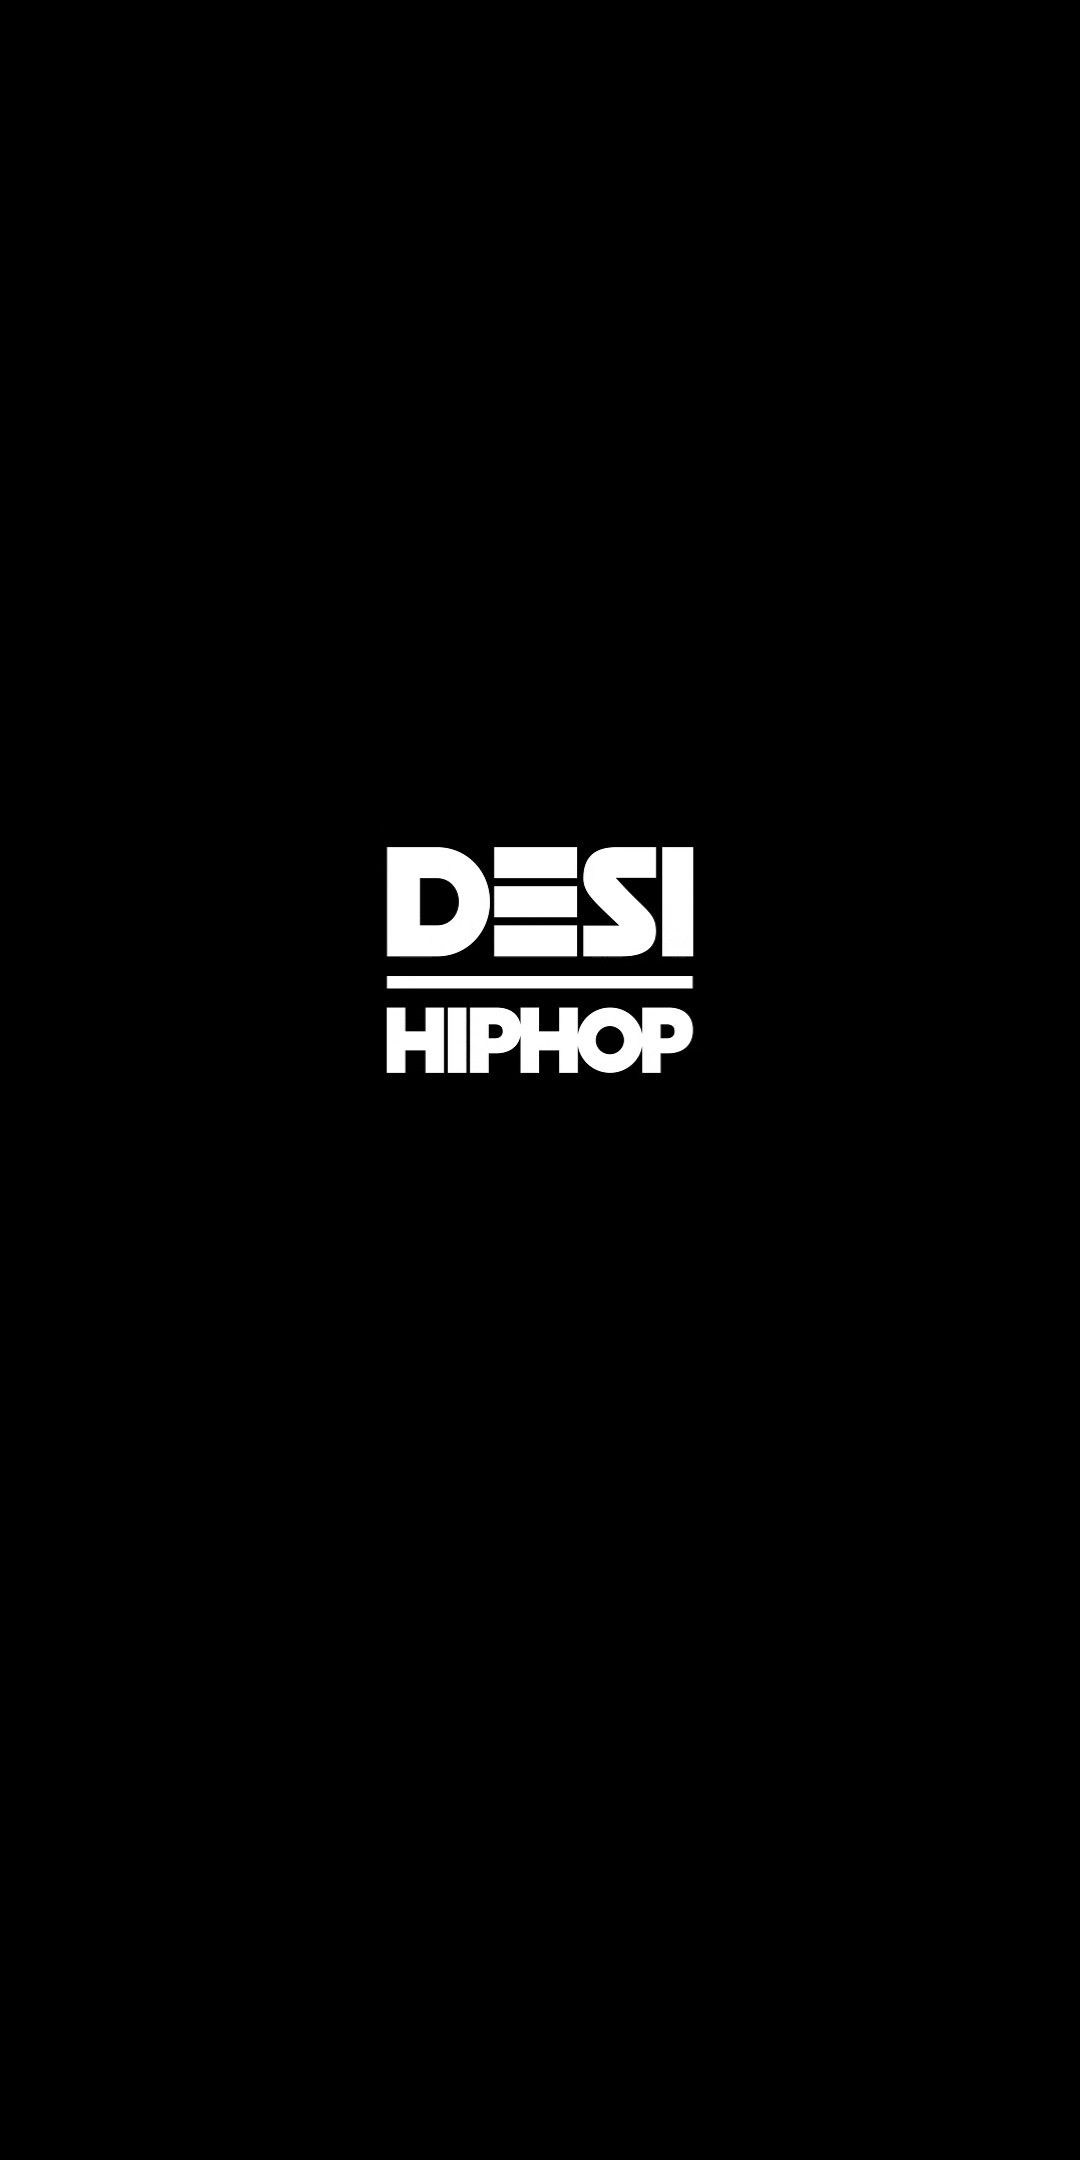 Desi Hip Hop. Hip Hop Logo, Hip Hop, Creative Logo